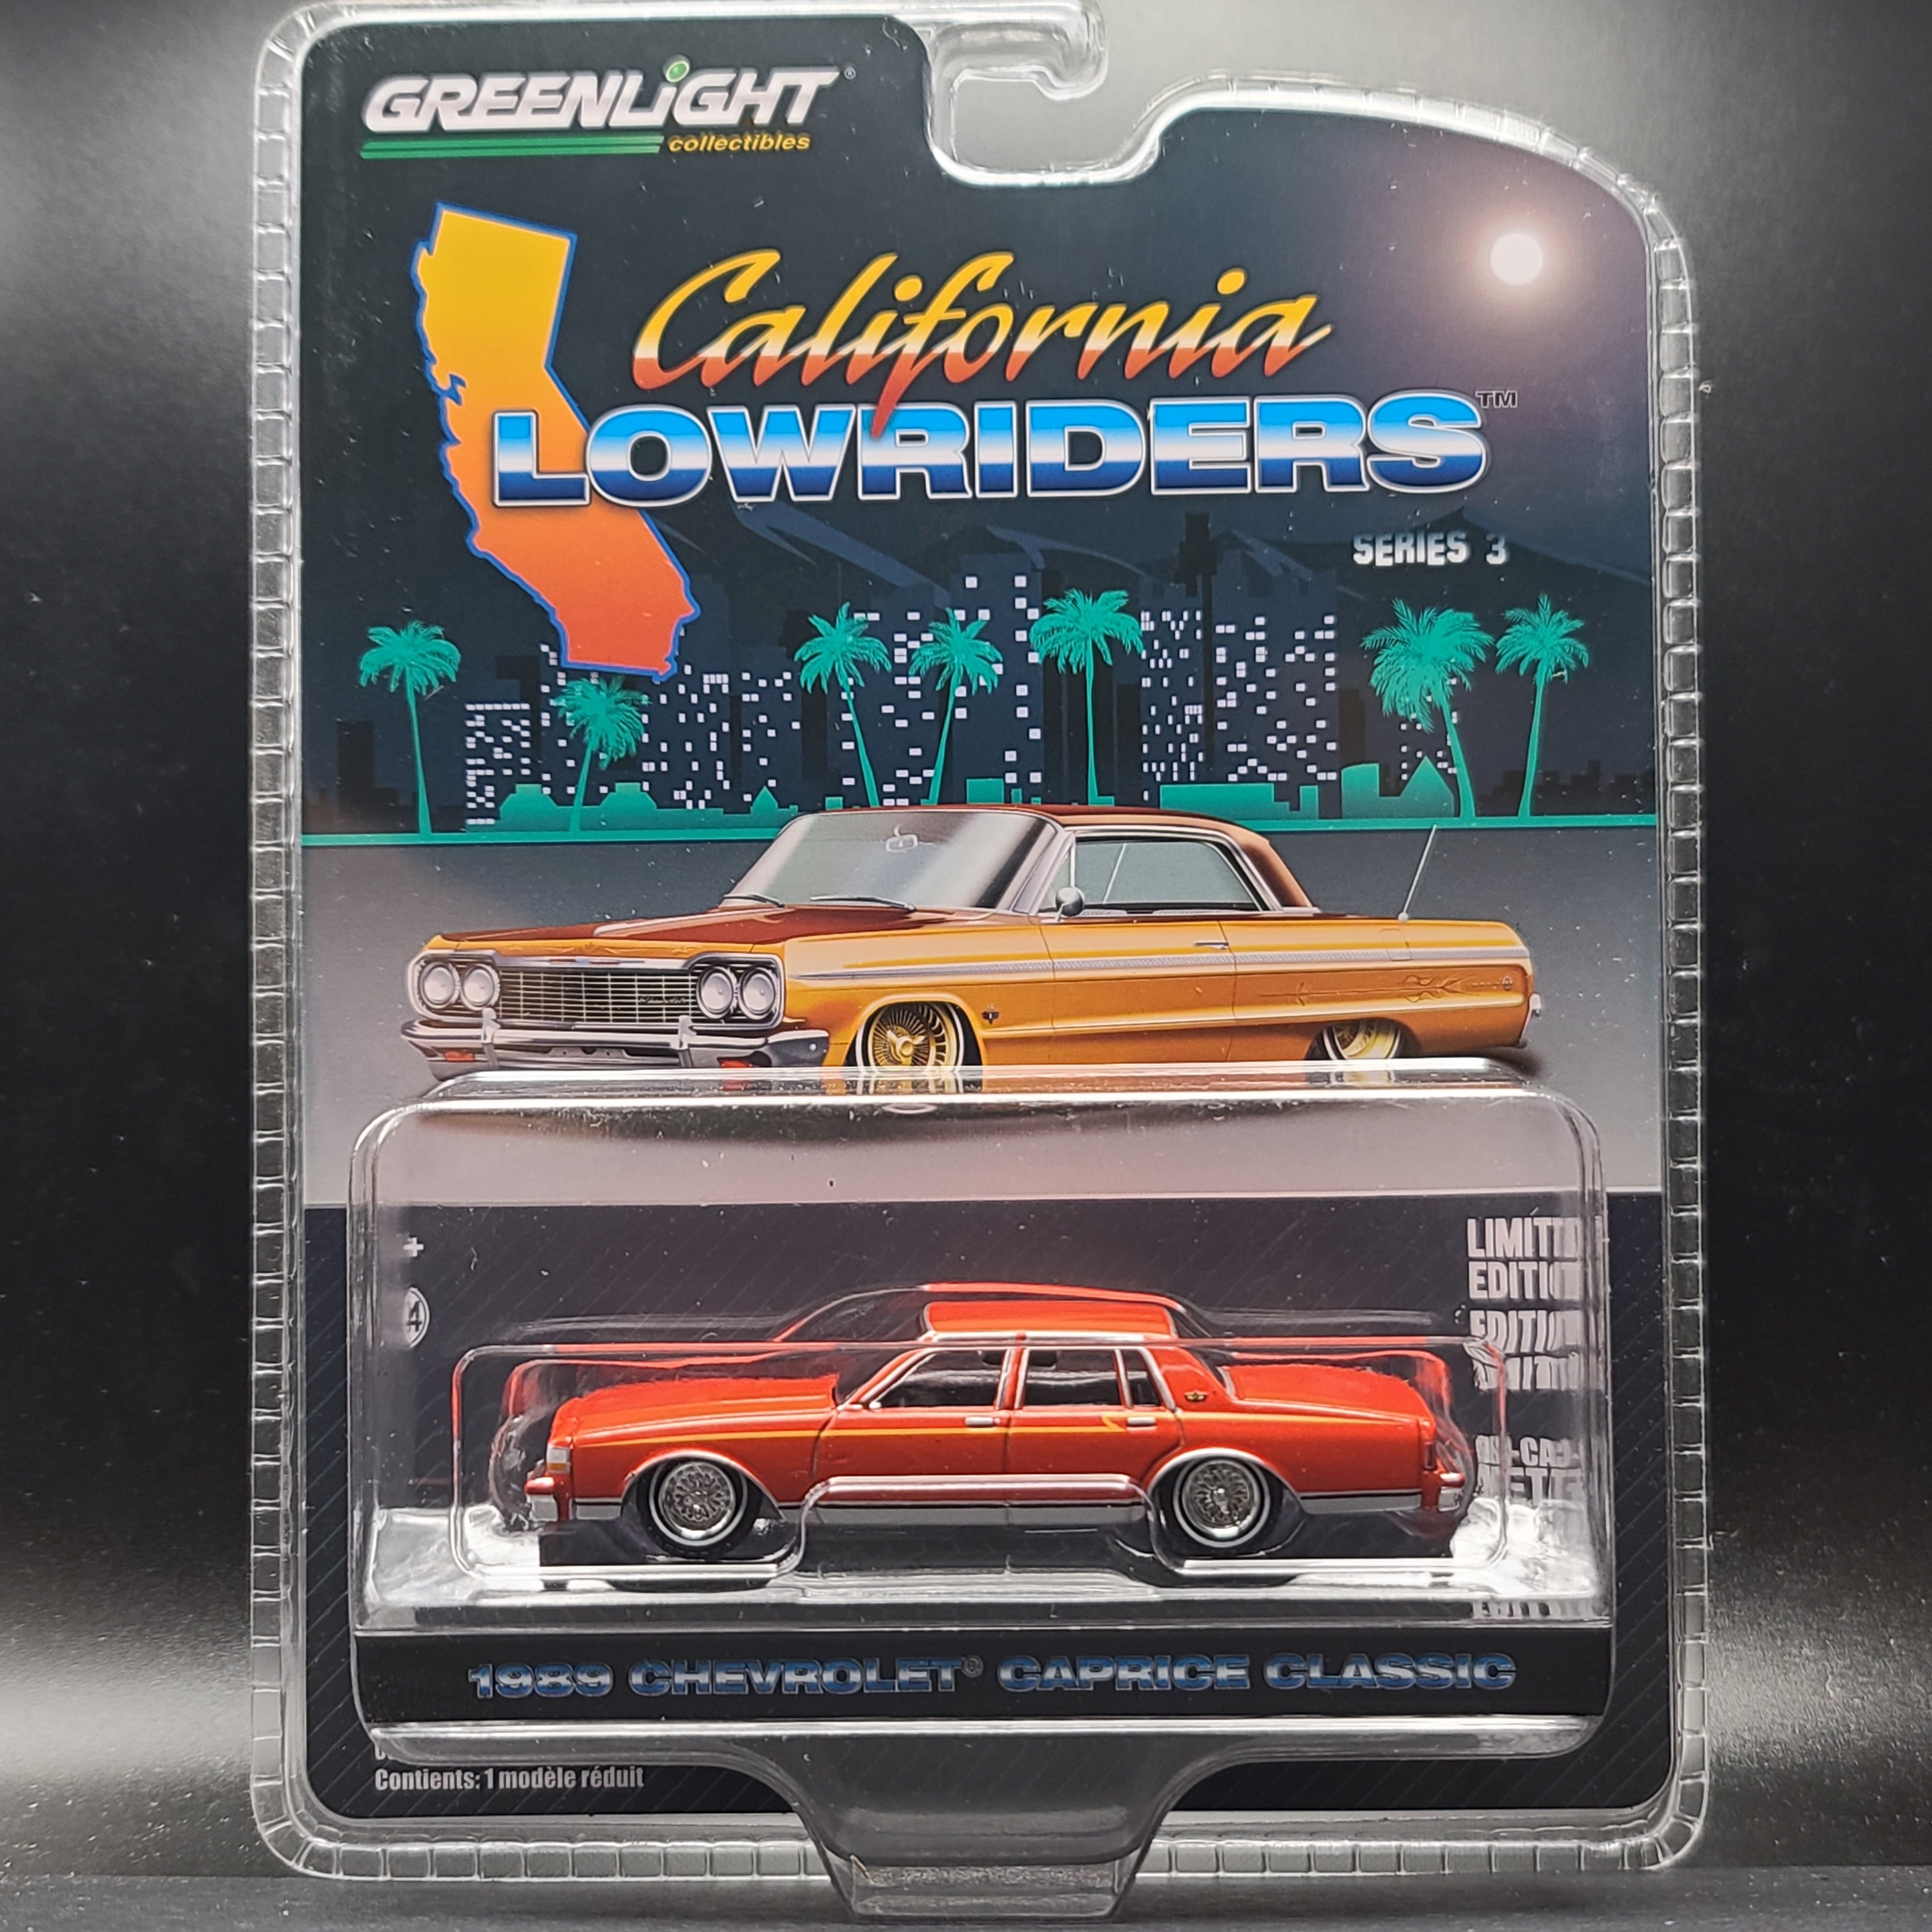 Greenlight '89 Chevrolet Caprice Classic (2023 California Lowriders - Series 3)